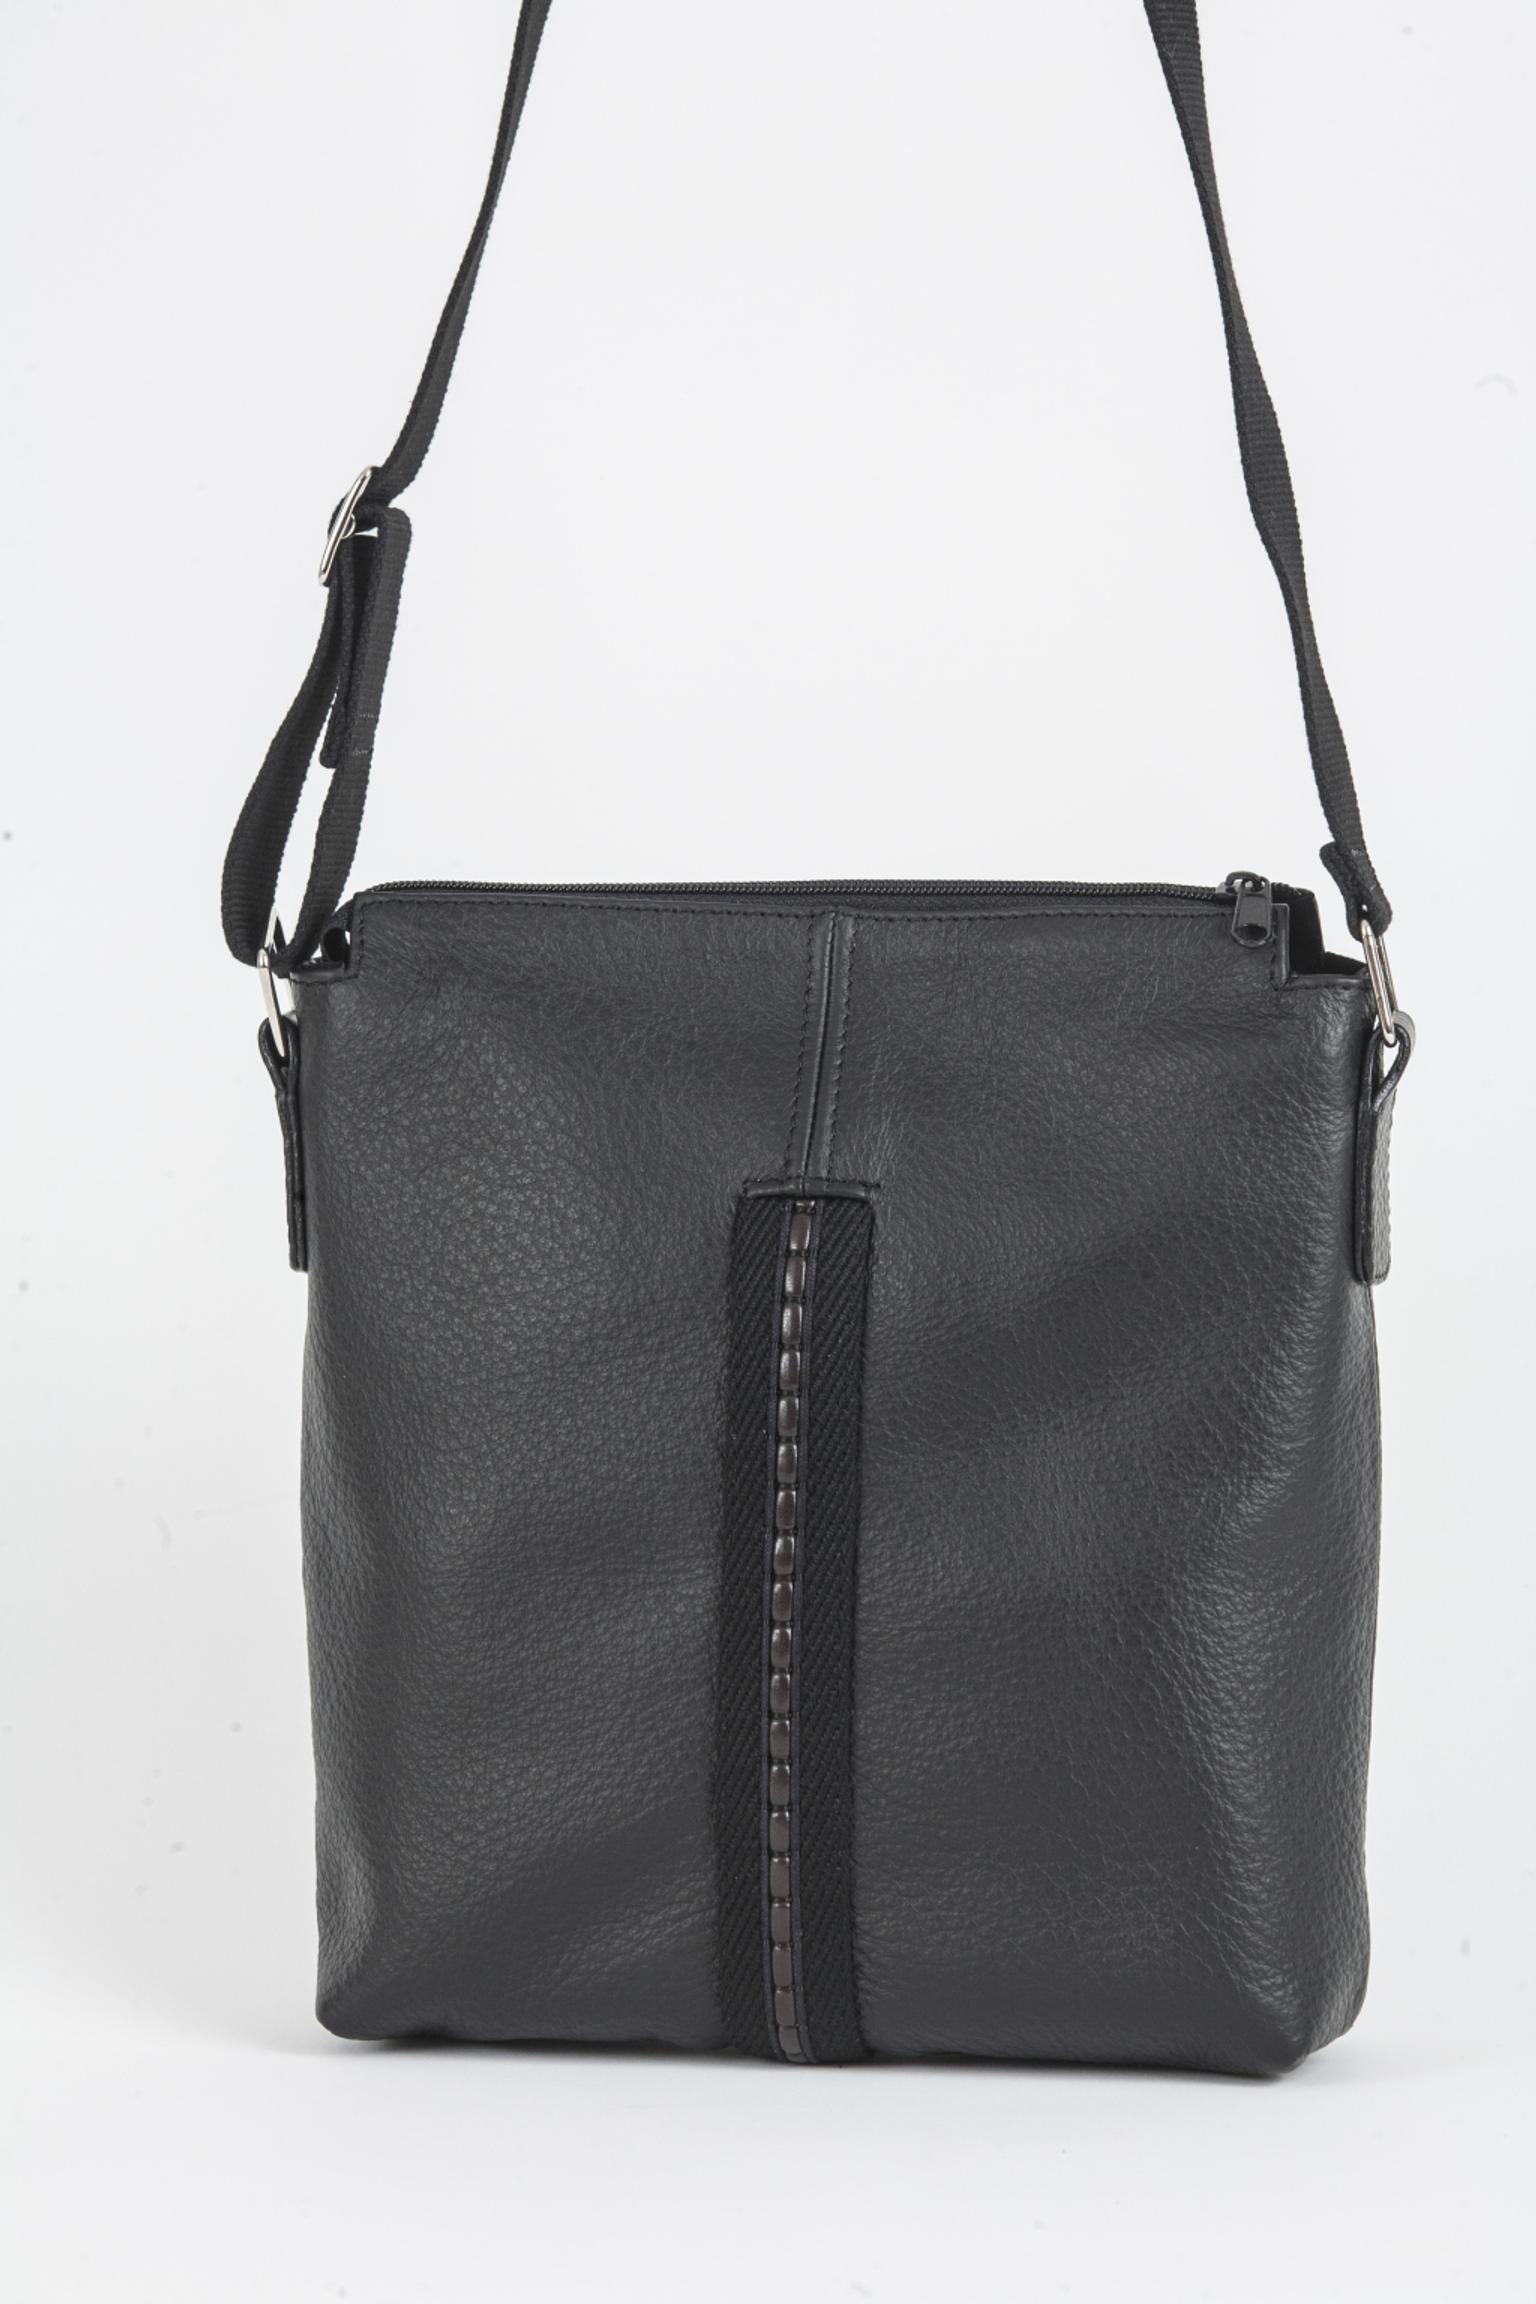 Musette Sample - Leather Shoulder Bag in SM5 Sutton for £30.00 for sale | Shpock